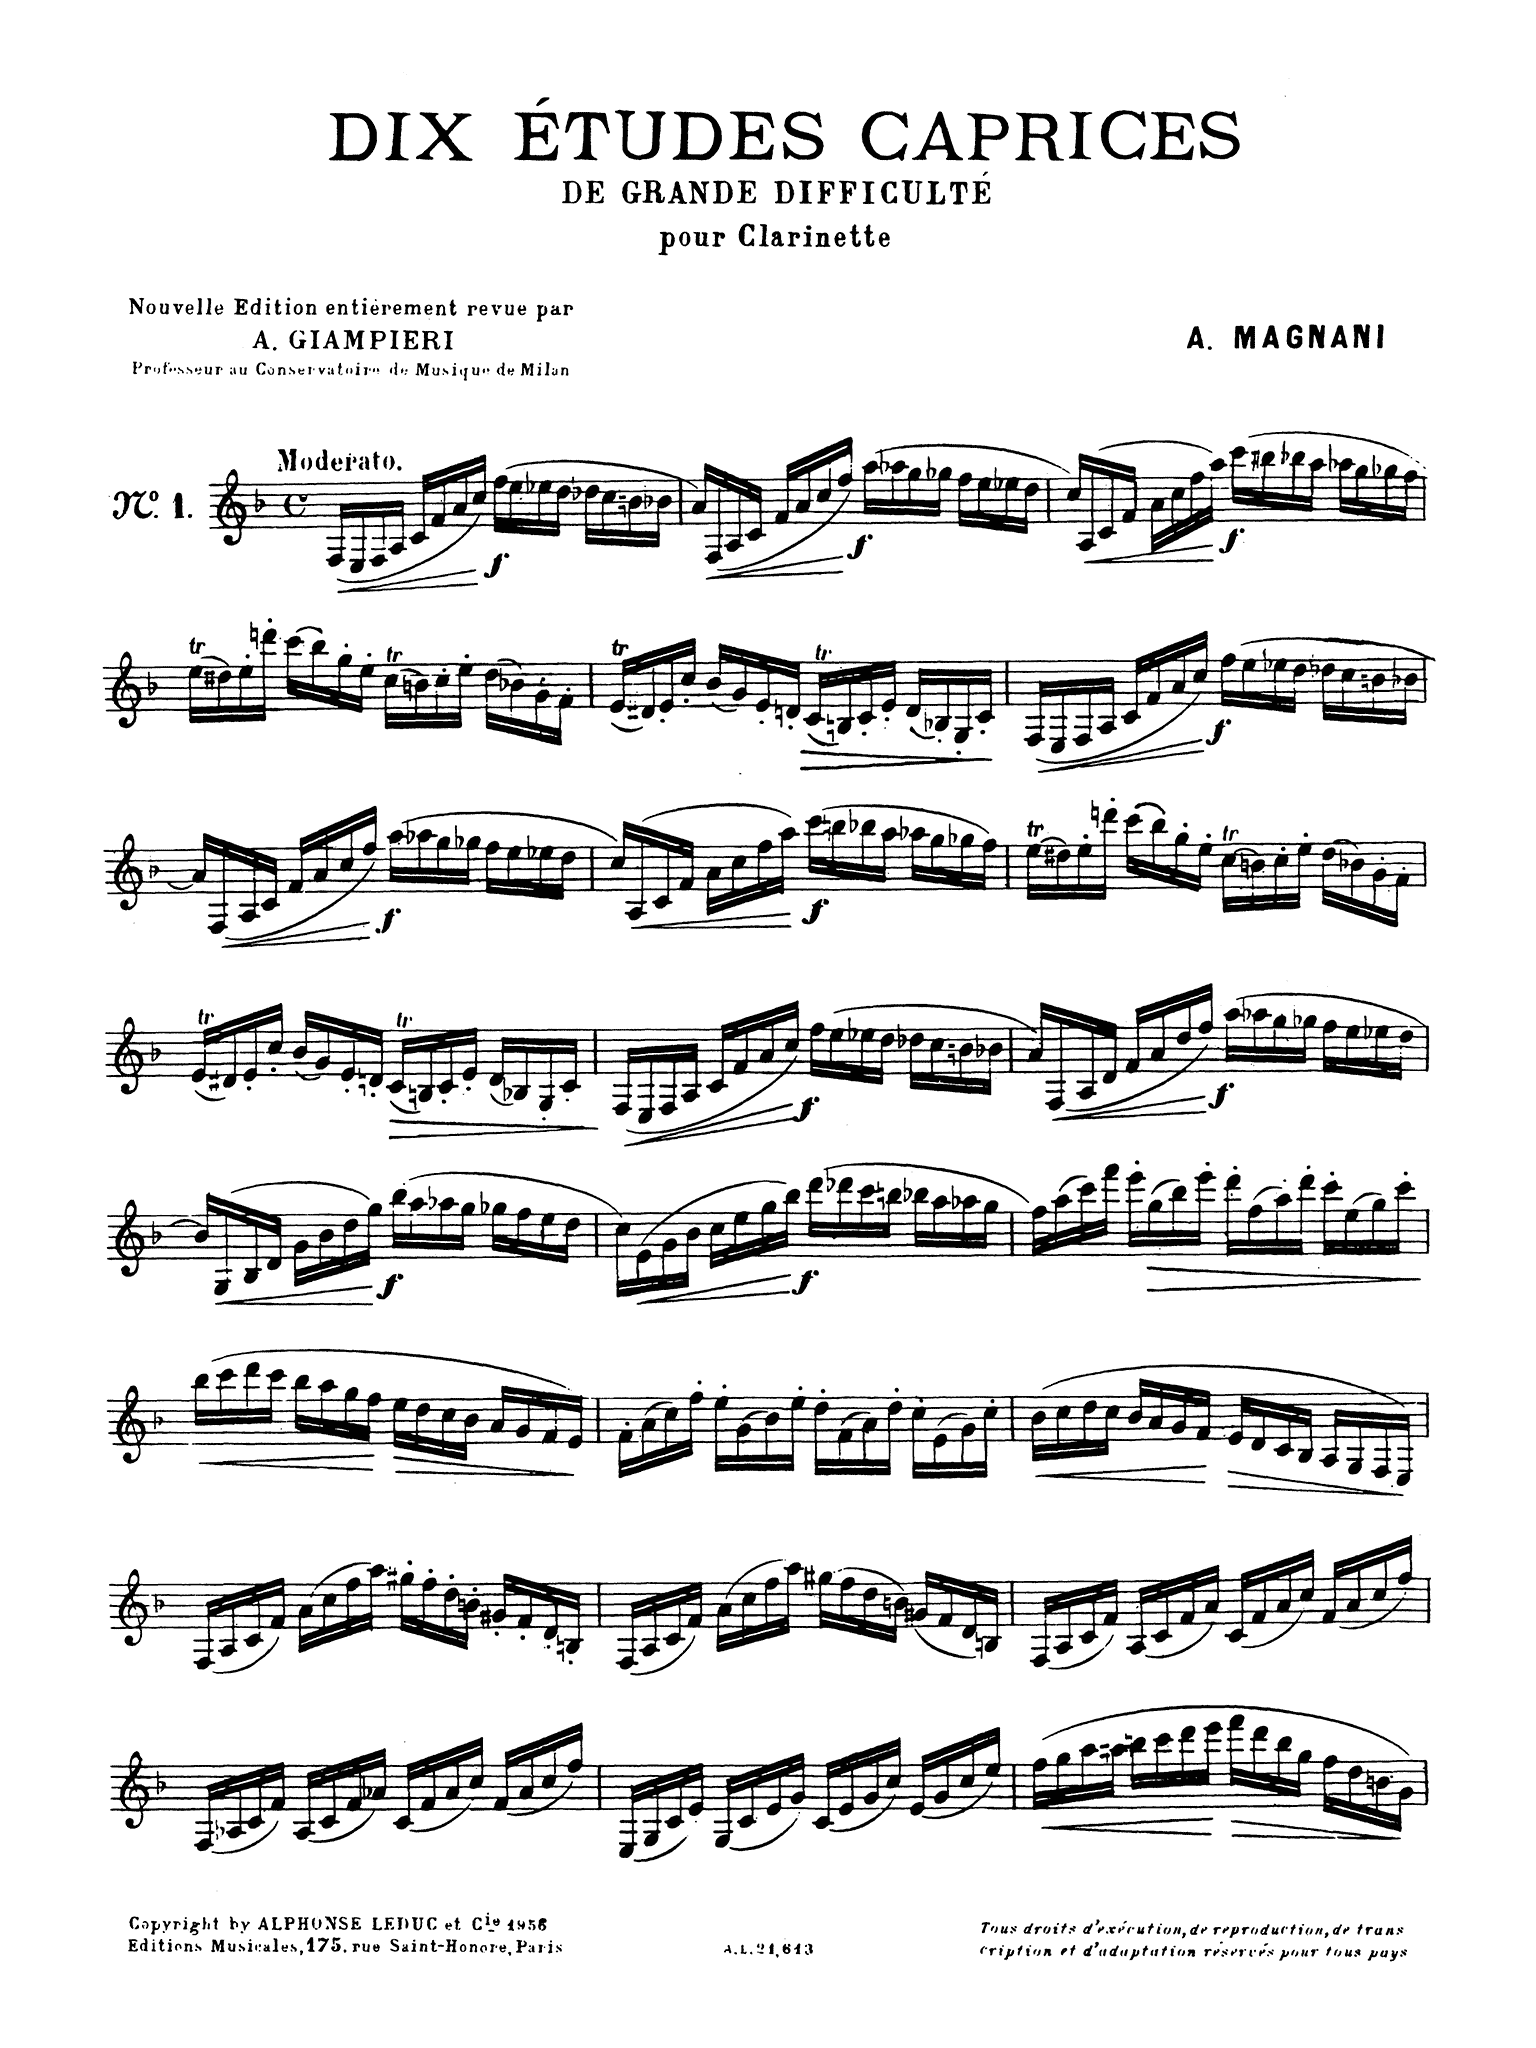 Magnani 10 Studi Capriccio of Great Difficulty for Clarinet No. 1